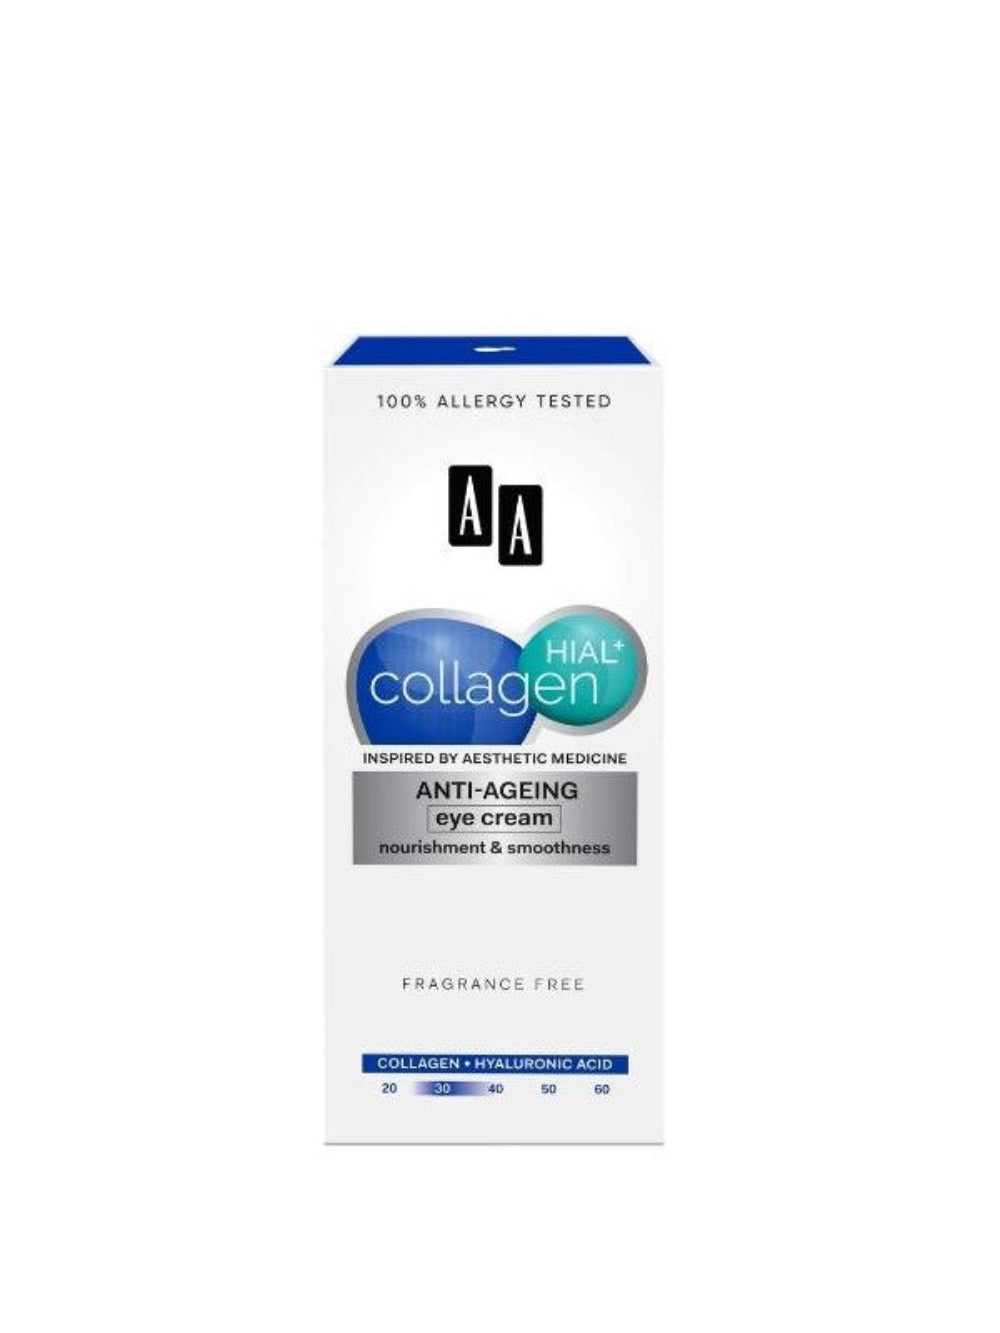 AA Collagen Hial + Eye Cream - 15 ml